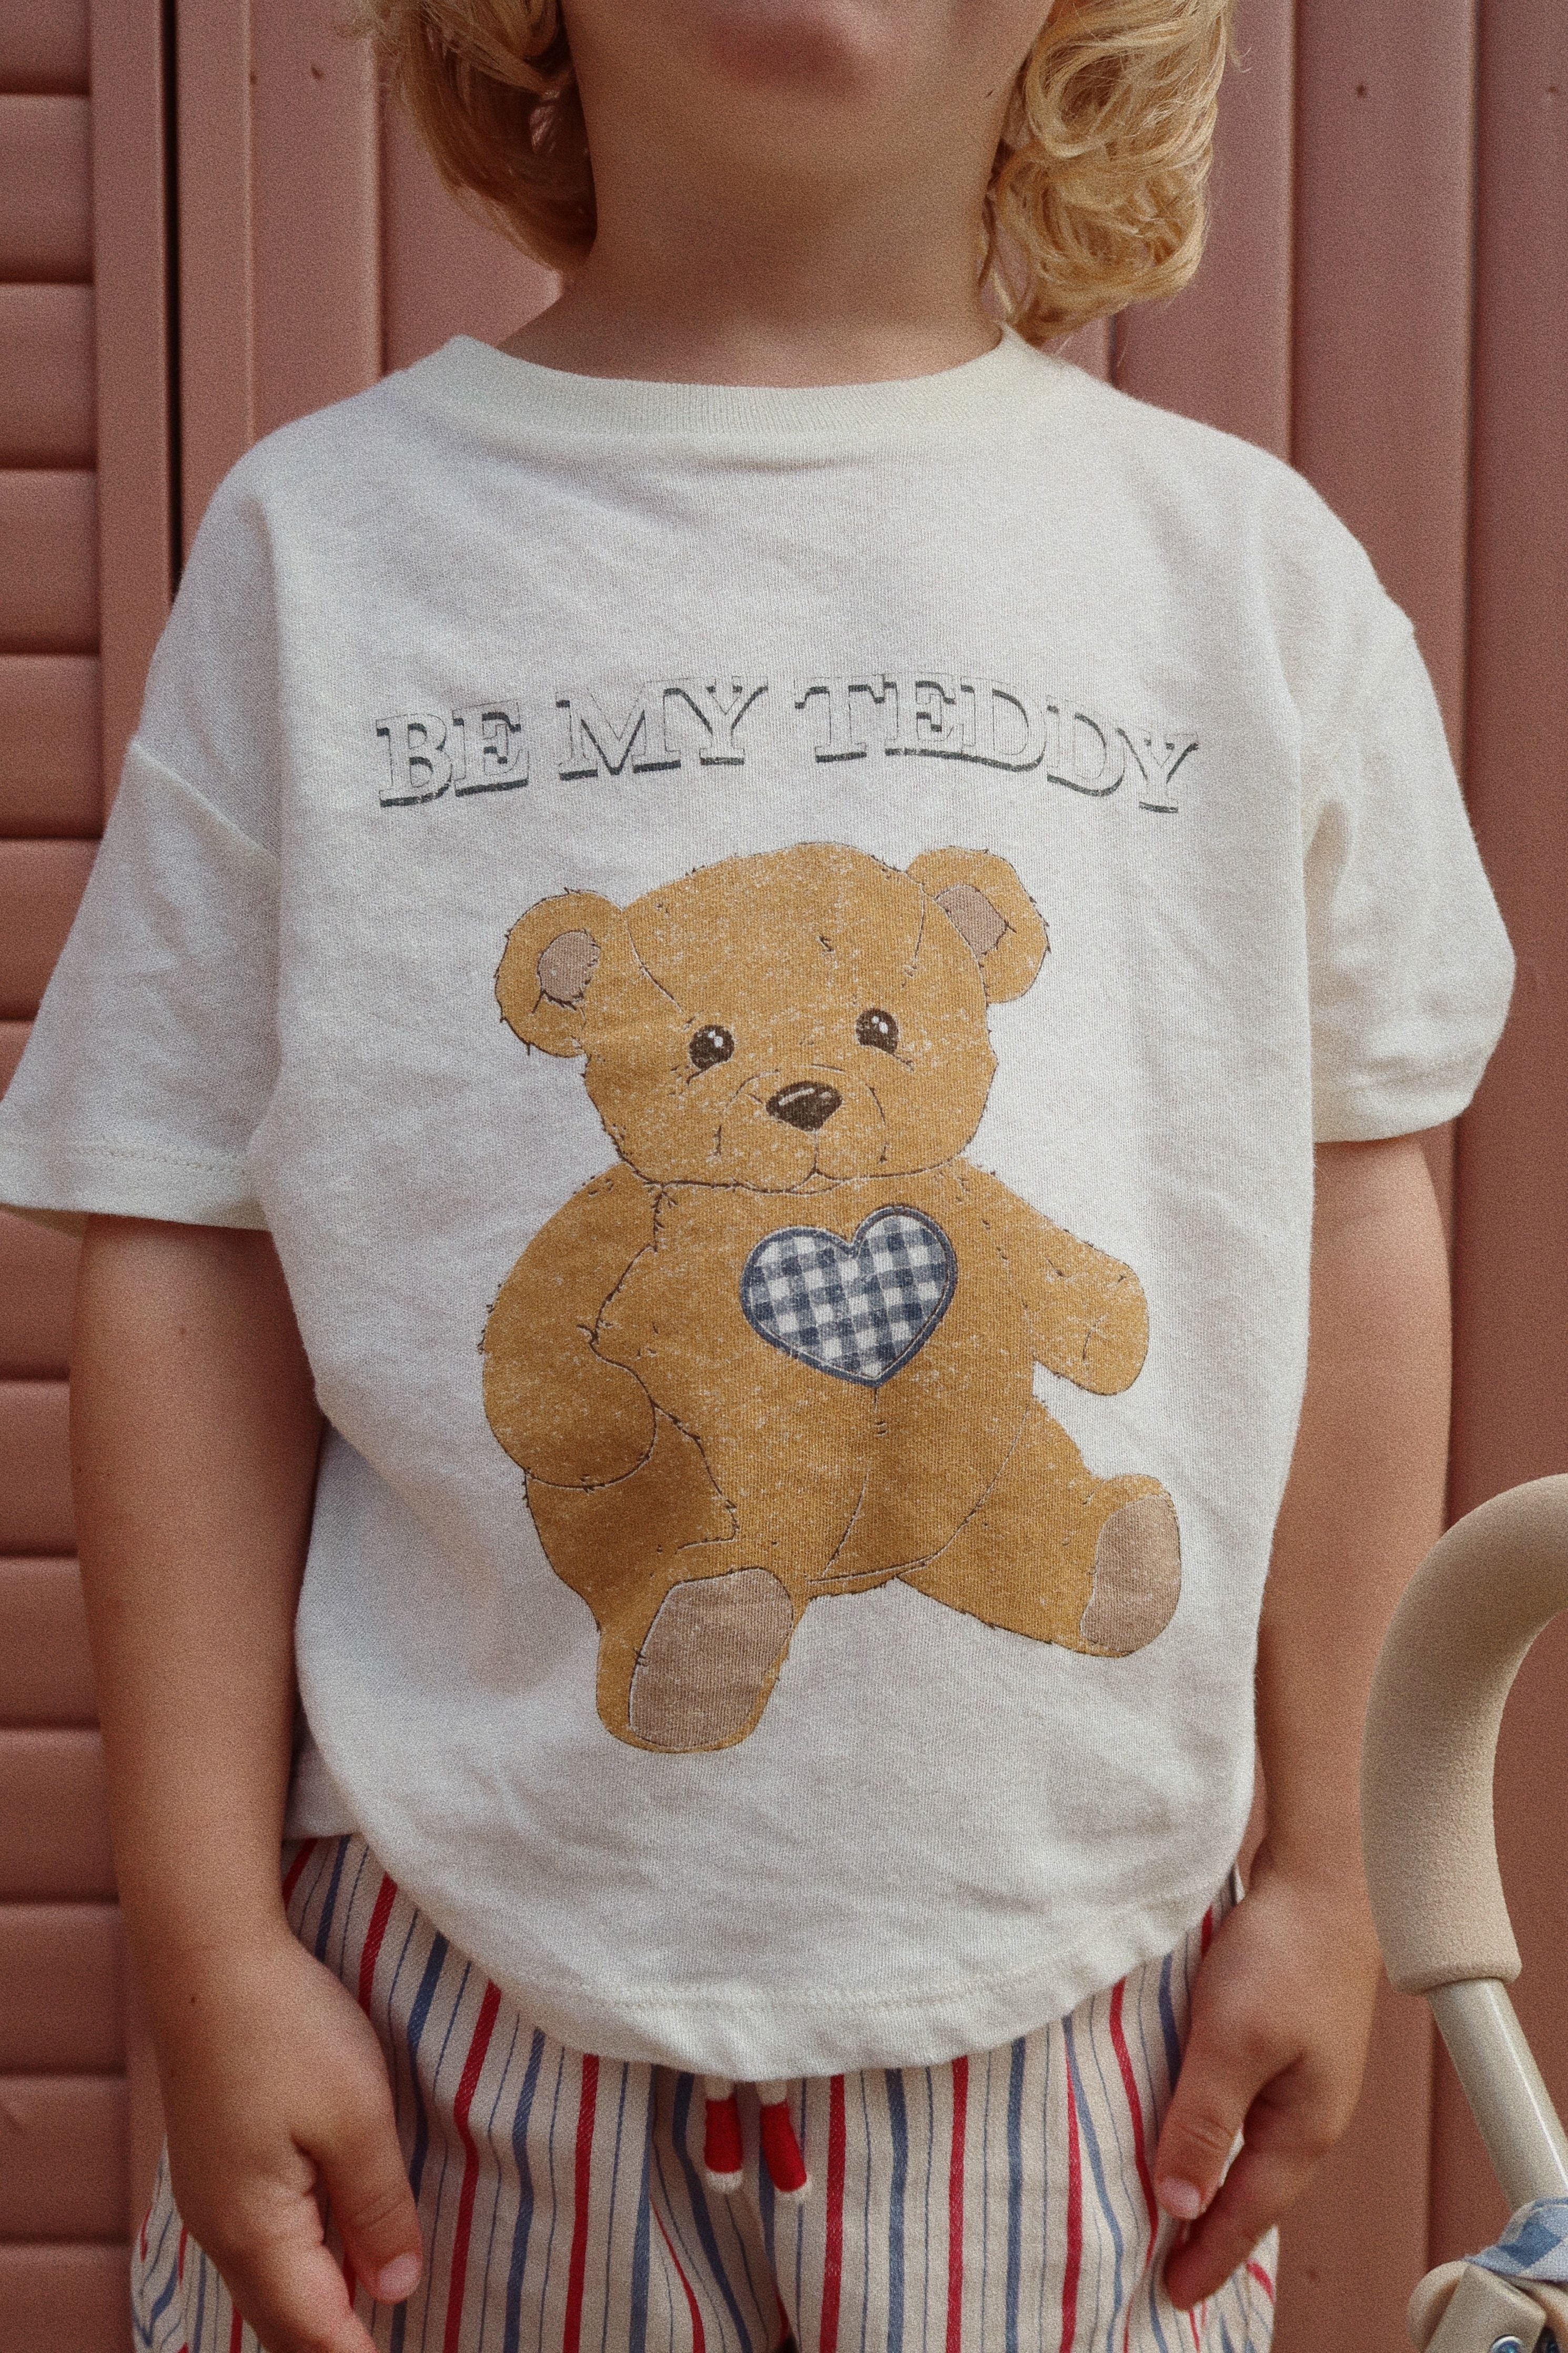 Era T-Shirt- Teddy Bear